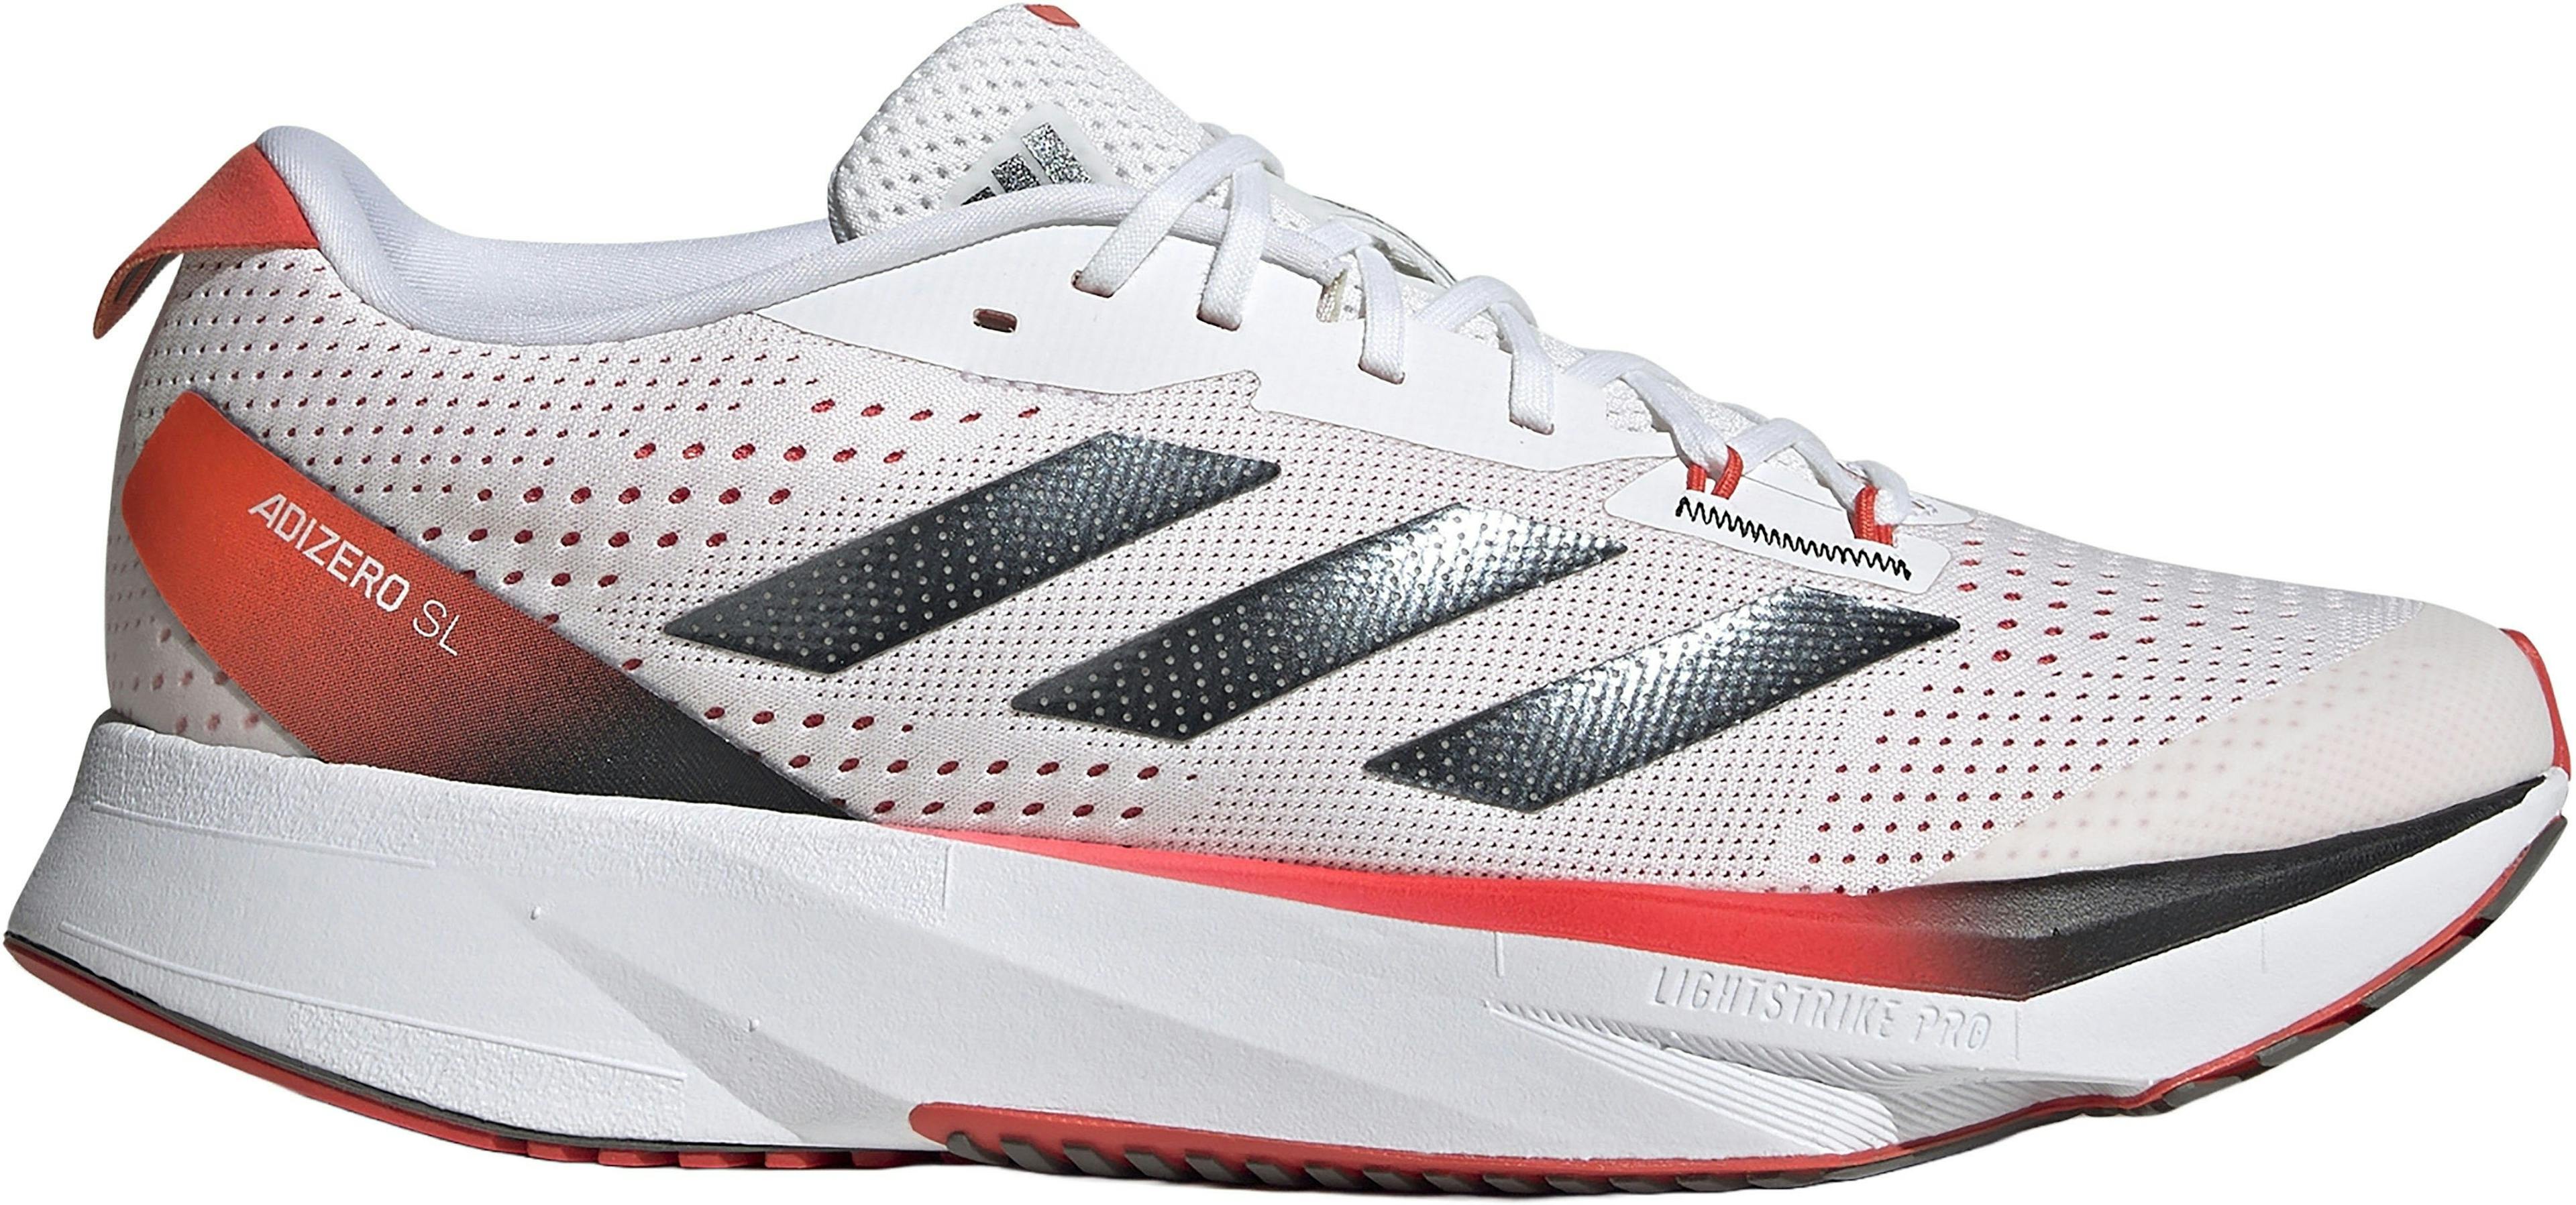 Product image for Adizero SL Running Shoes - Men's